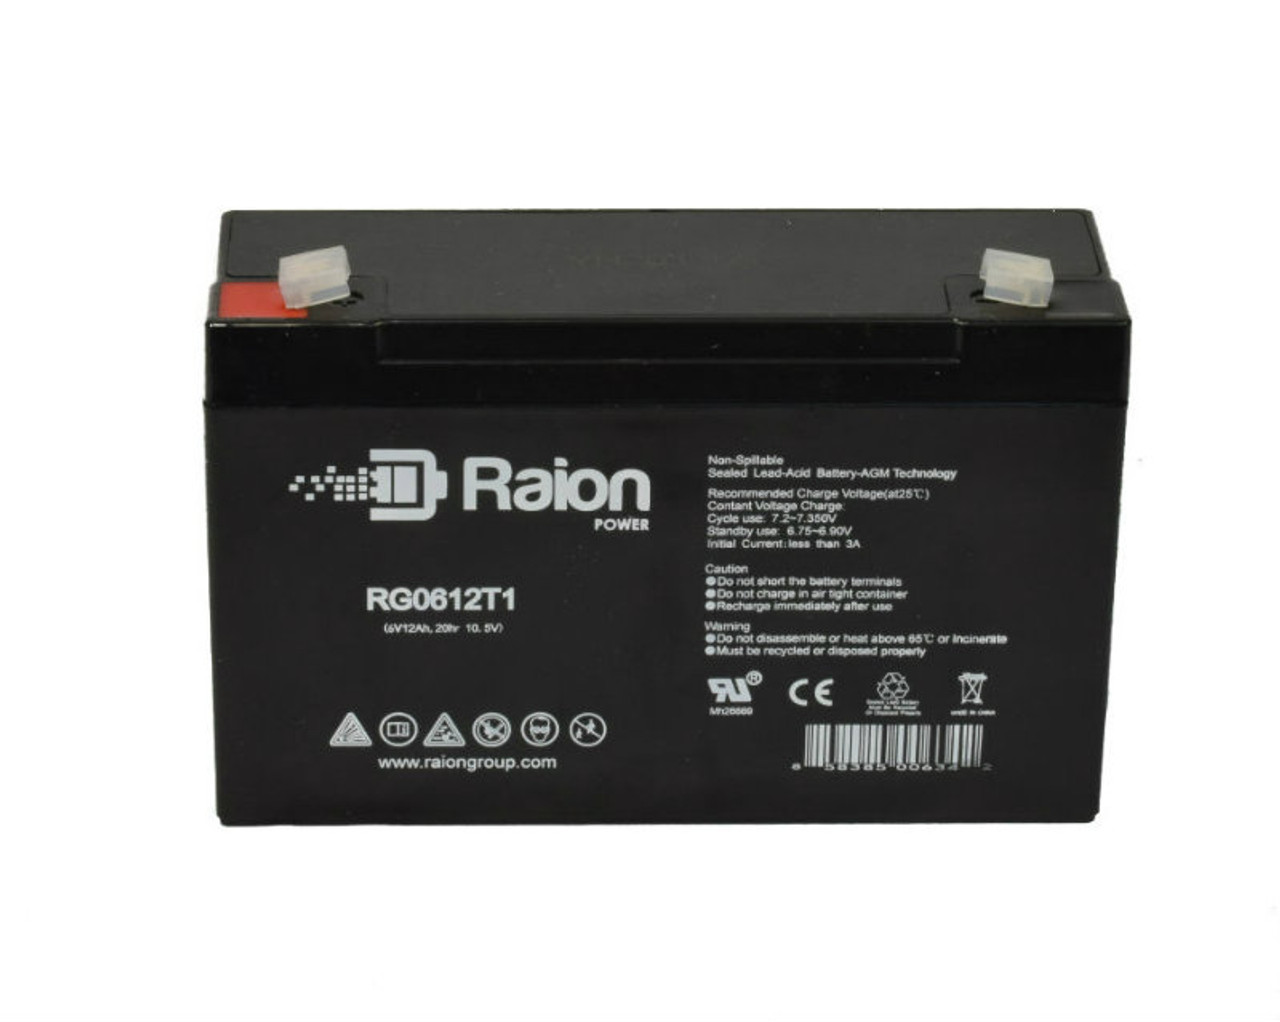 Raion Power RG06120T1 Replacement Battery Cartridge for HP Powertrust